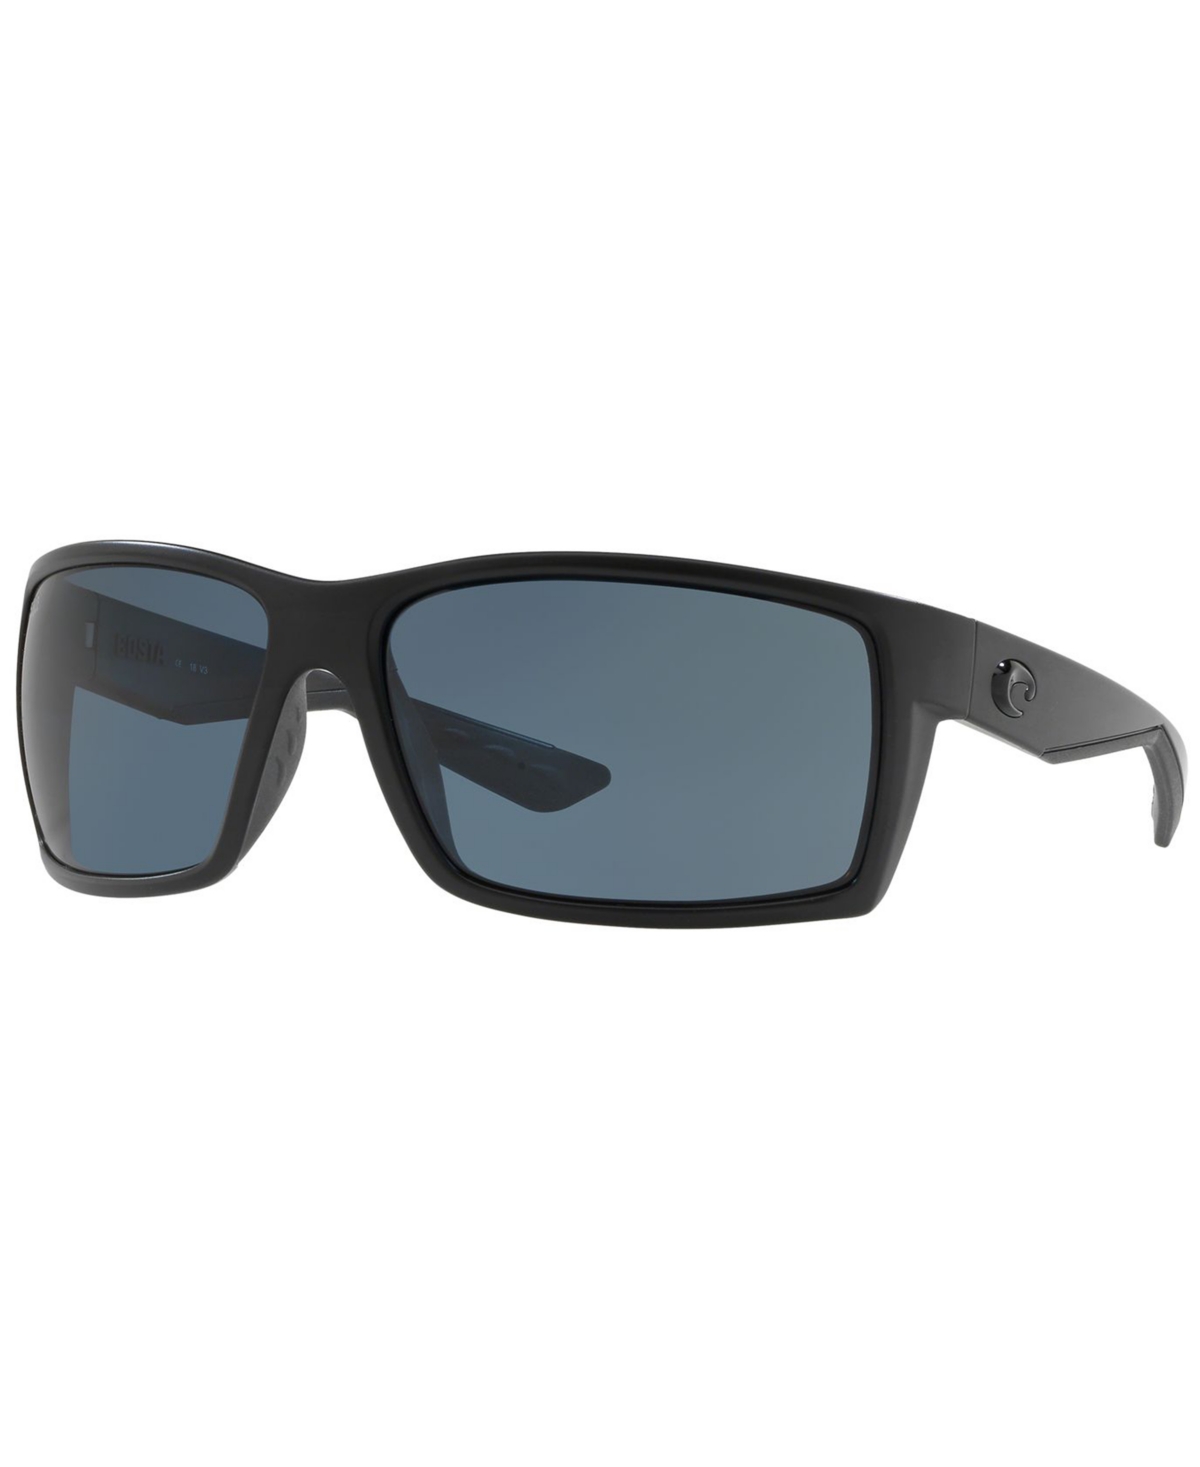 Polarized Sunglasses, Reefton 64 - BLACK BLACK/GREY